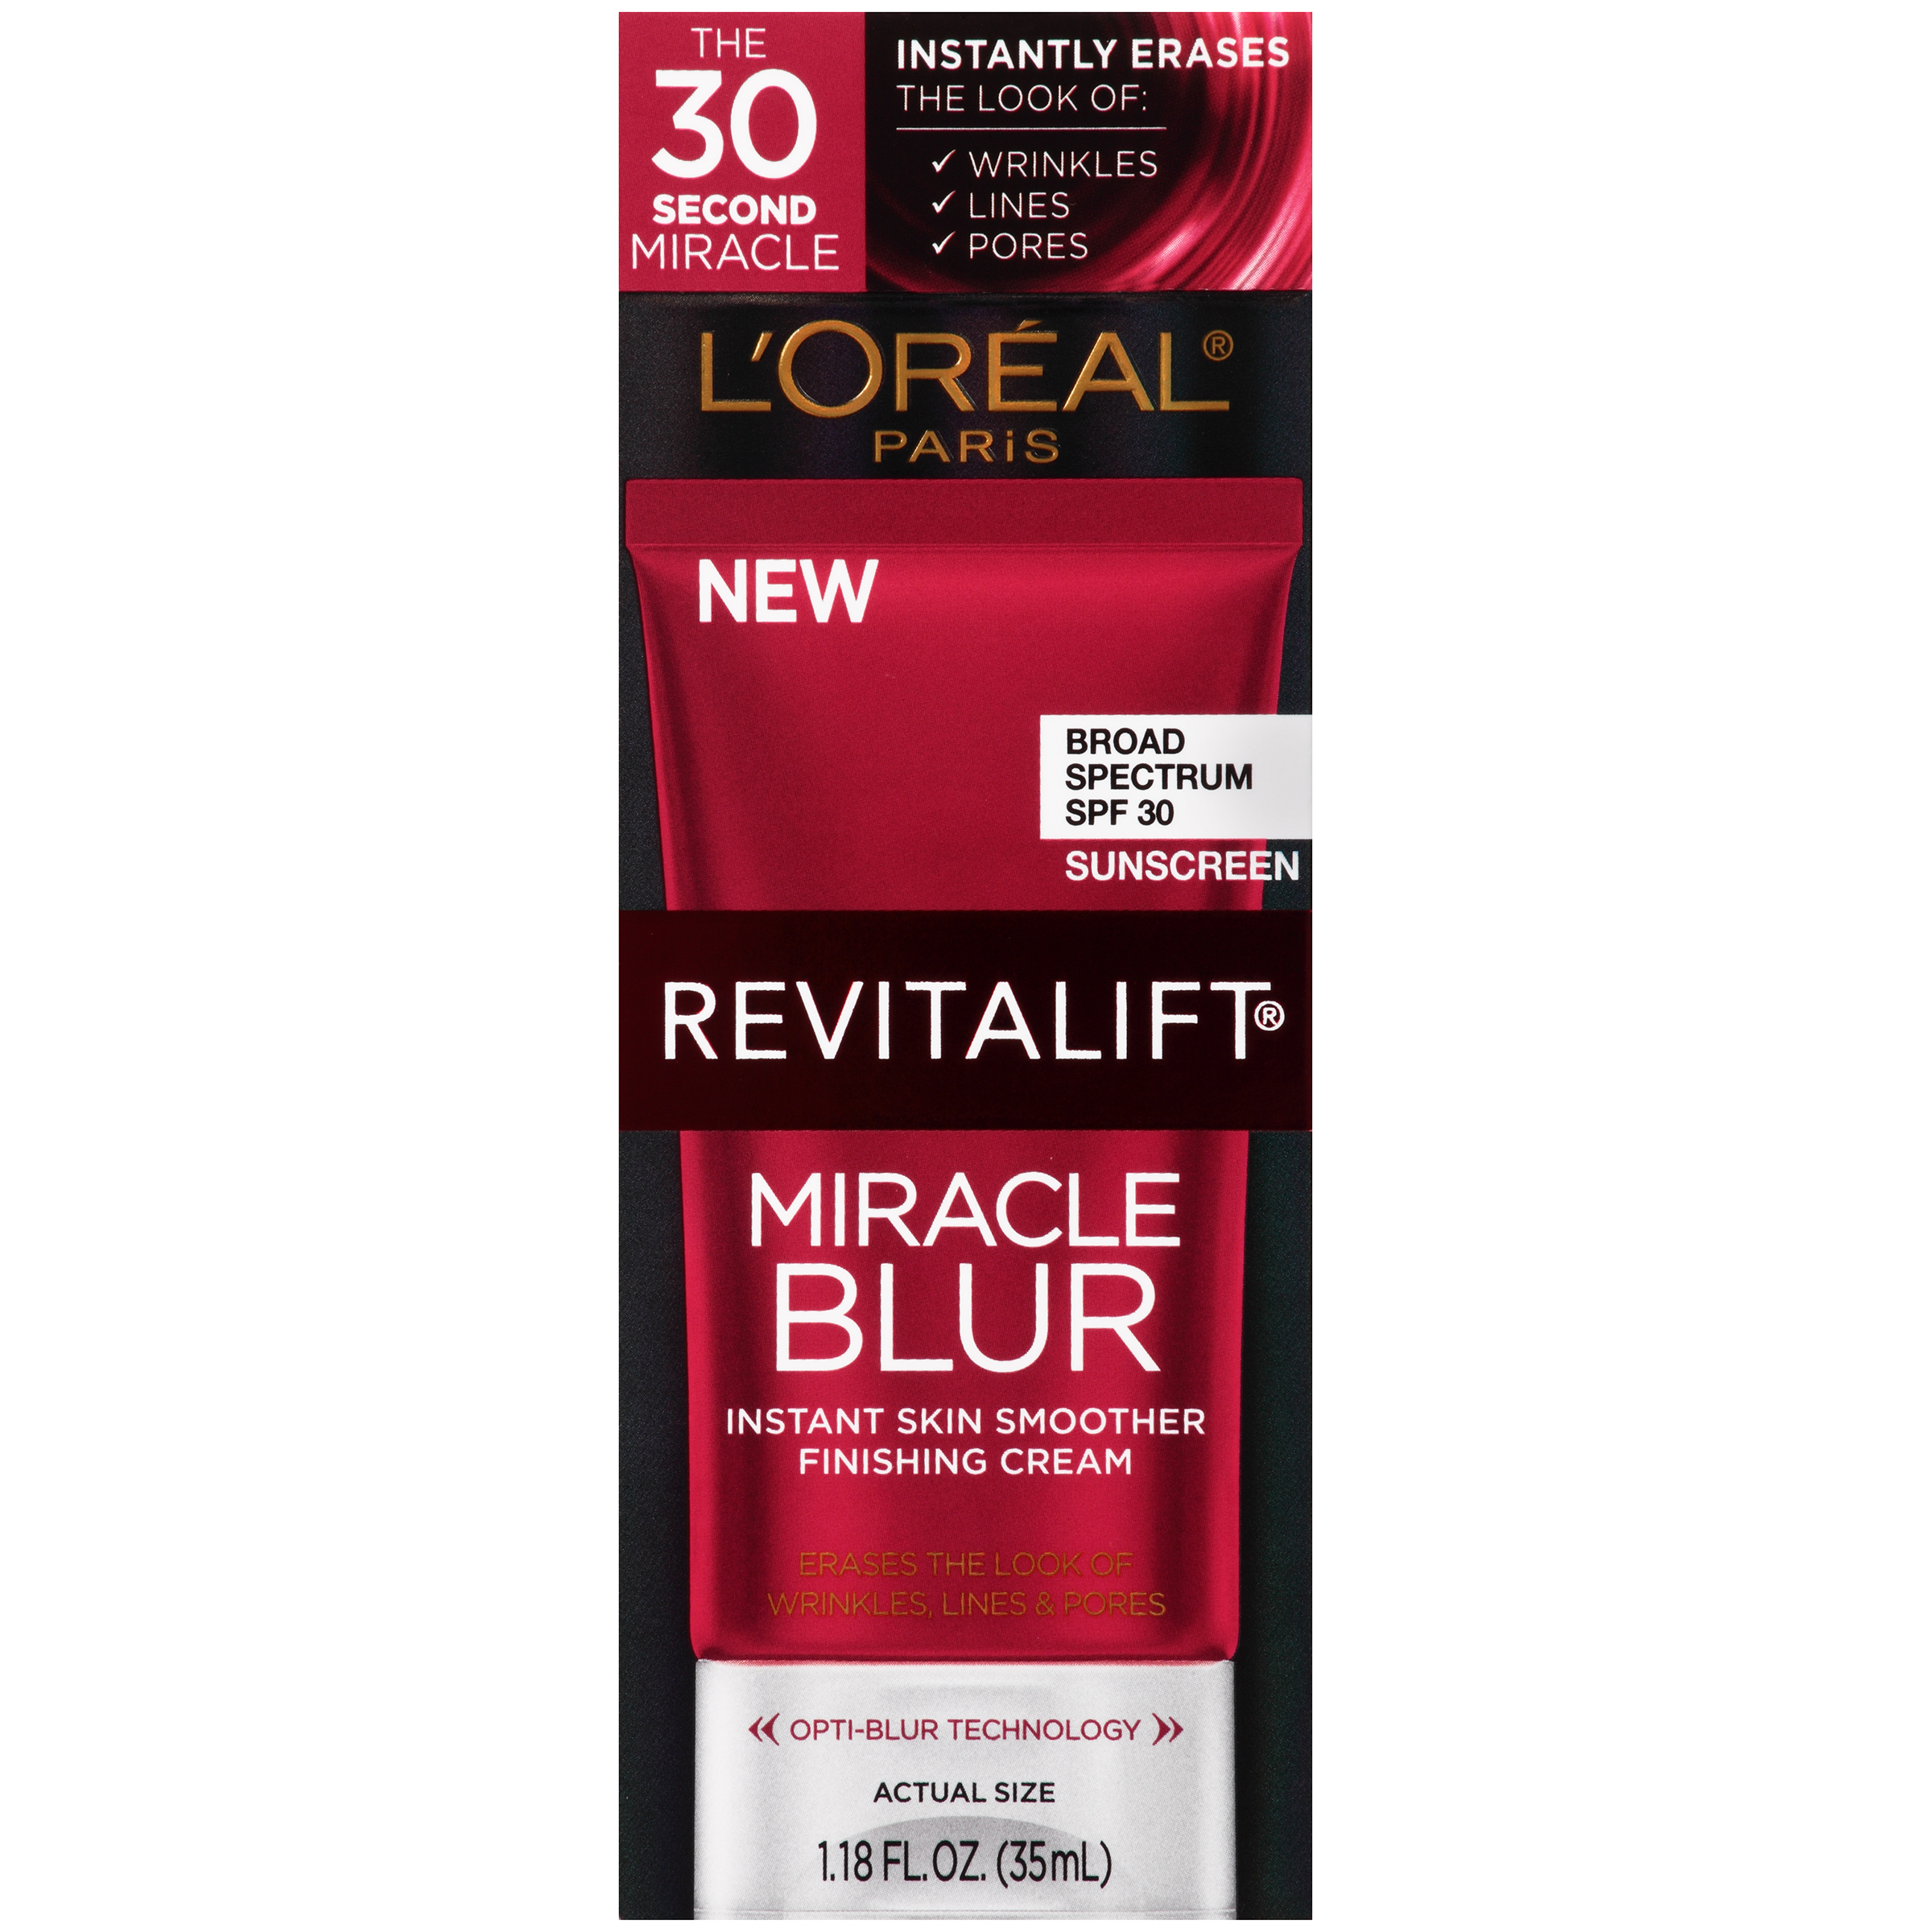 L'Oreal Paris Revitalift Miracle Blur Broad Spectrum SPF 30 Sunscreen 1.18 fl oz - image 4 of 6